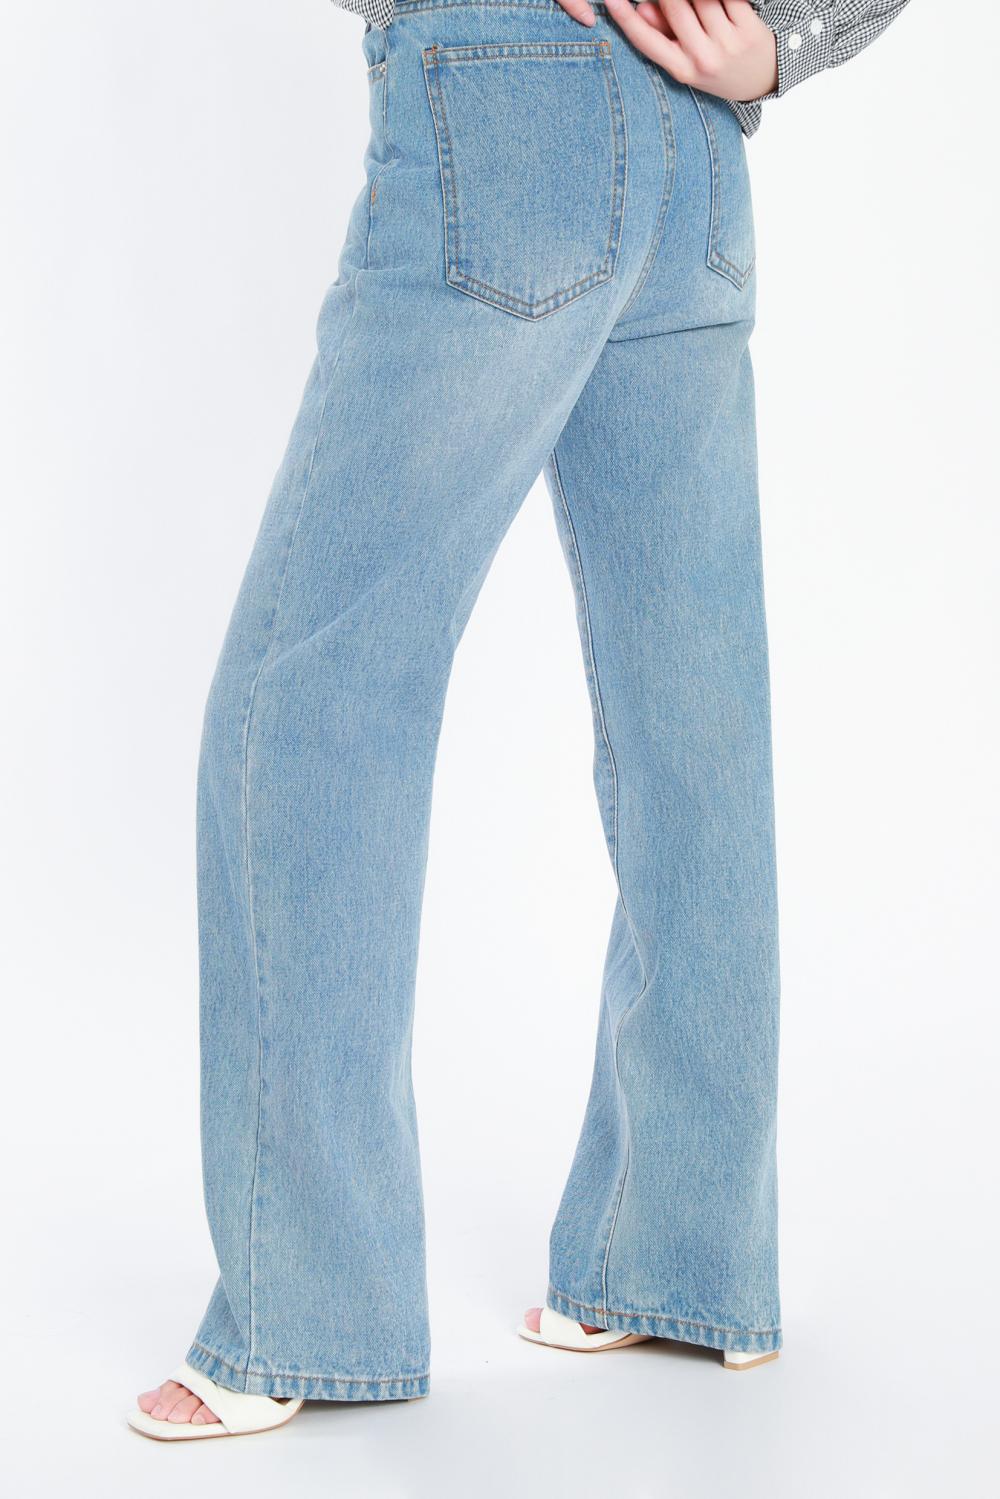 Jeans ramping biru muda